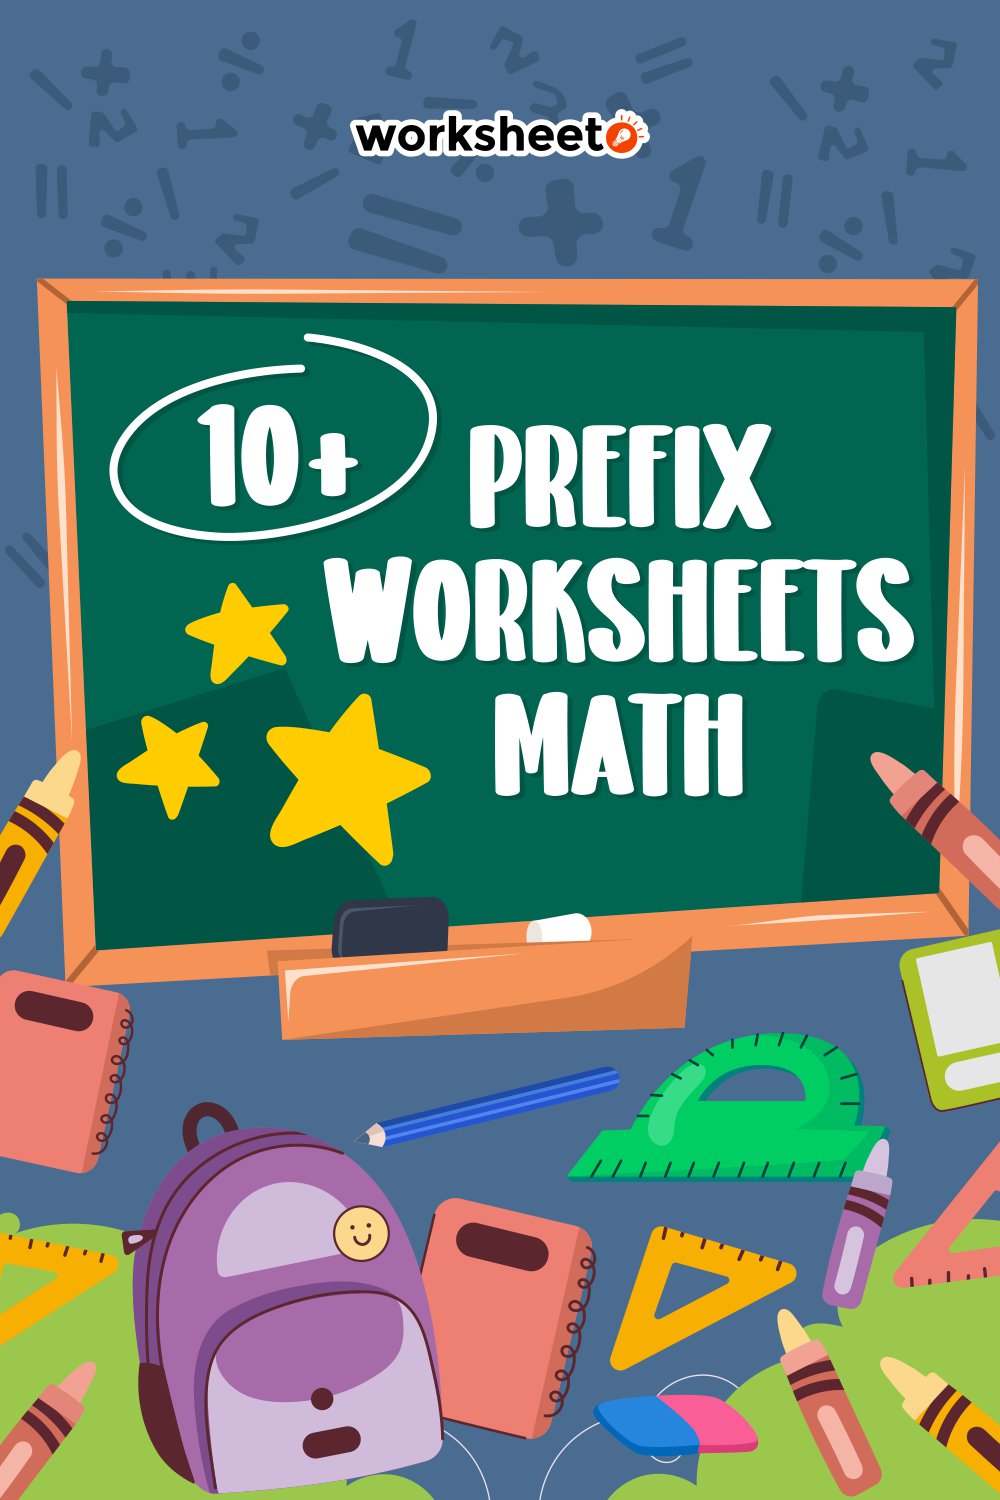 11 Images of Prefix Worksheets Math